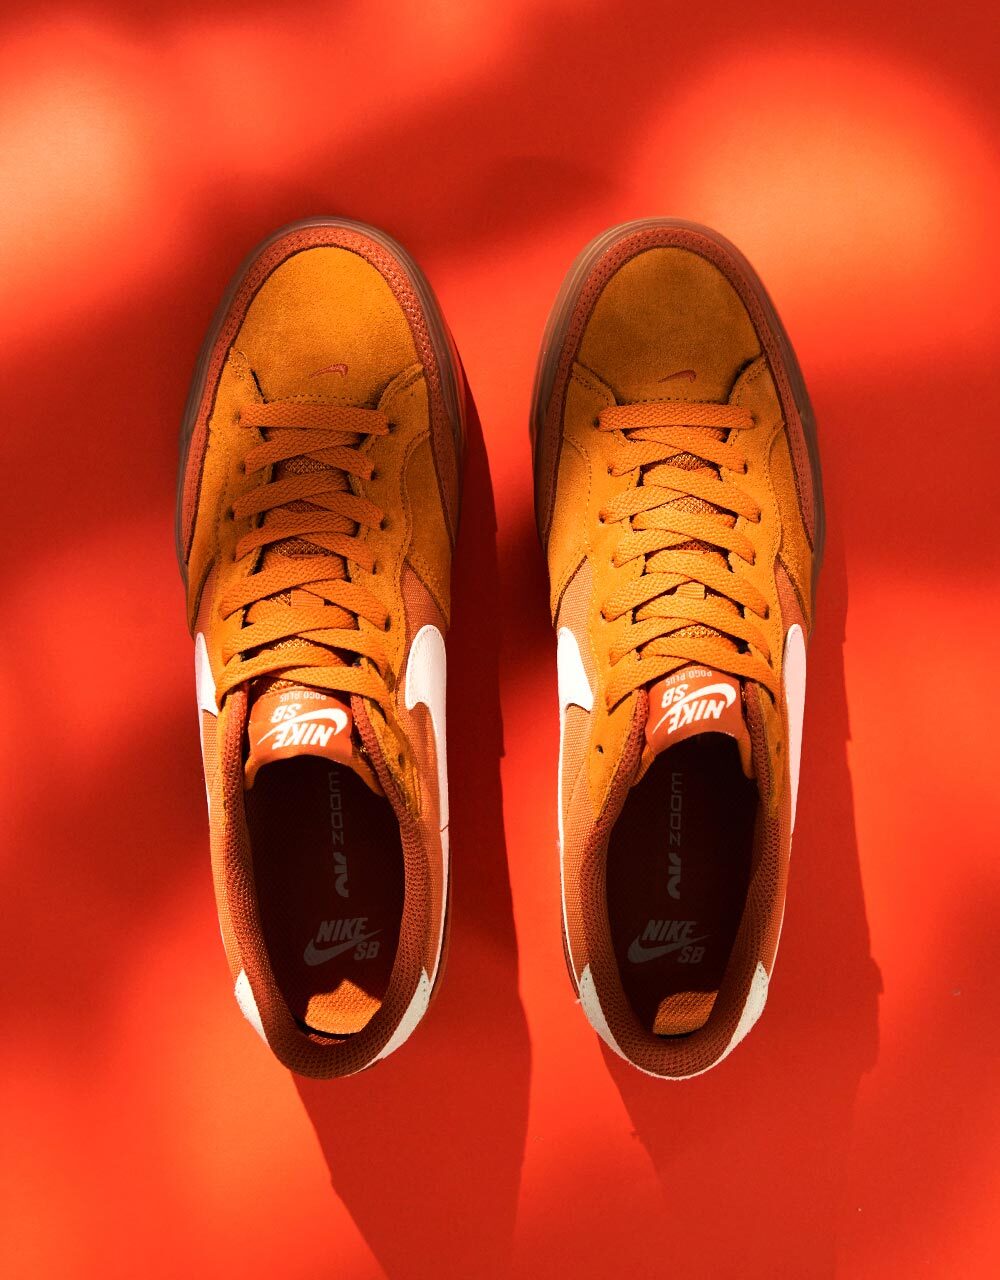 Nike SB Zoom Pogo Plus Skate Shoes - Monarch/Summit White-Burnt Sunrise-Gum Lt Brown